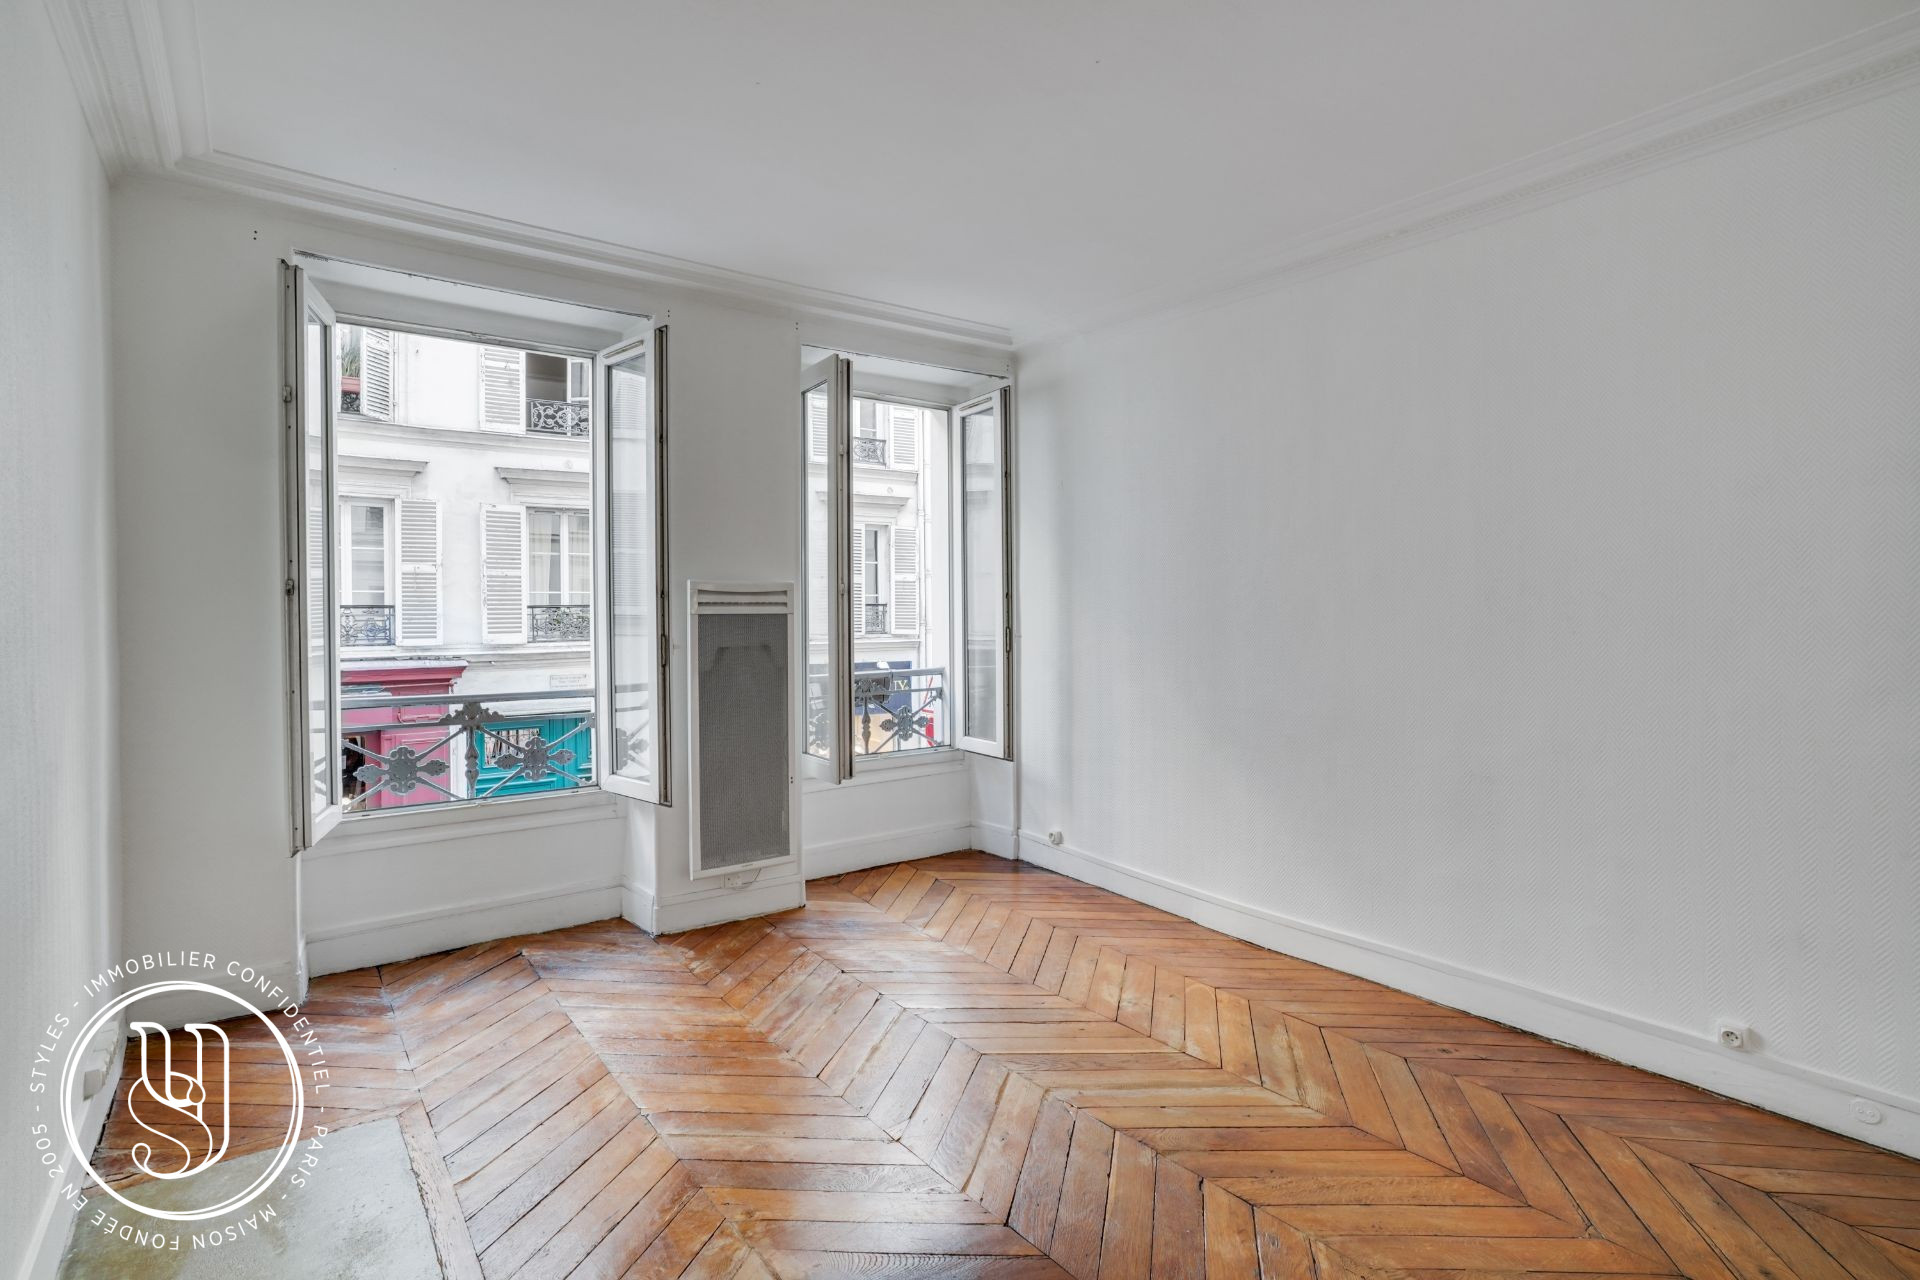 Paris - sold by S T Y L E S,  2-room apartment close to the Place Sain - image 5